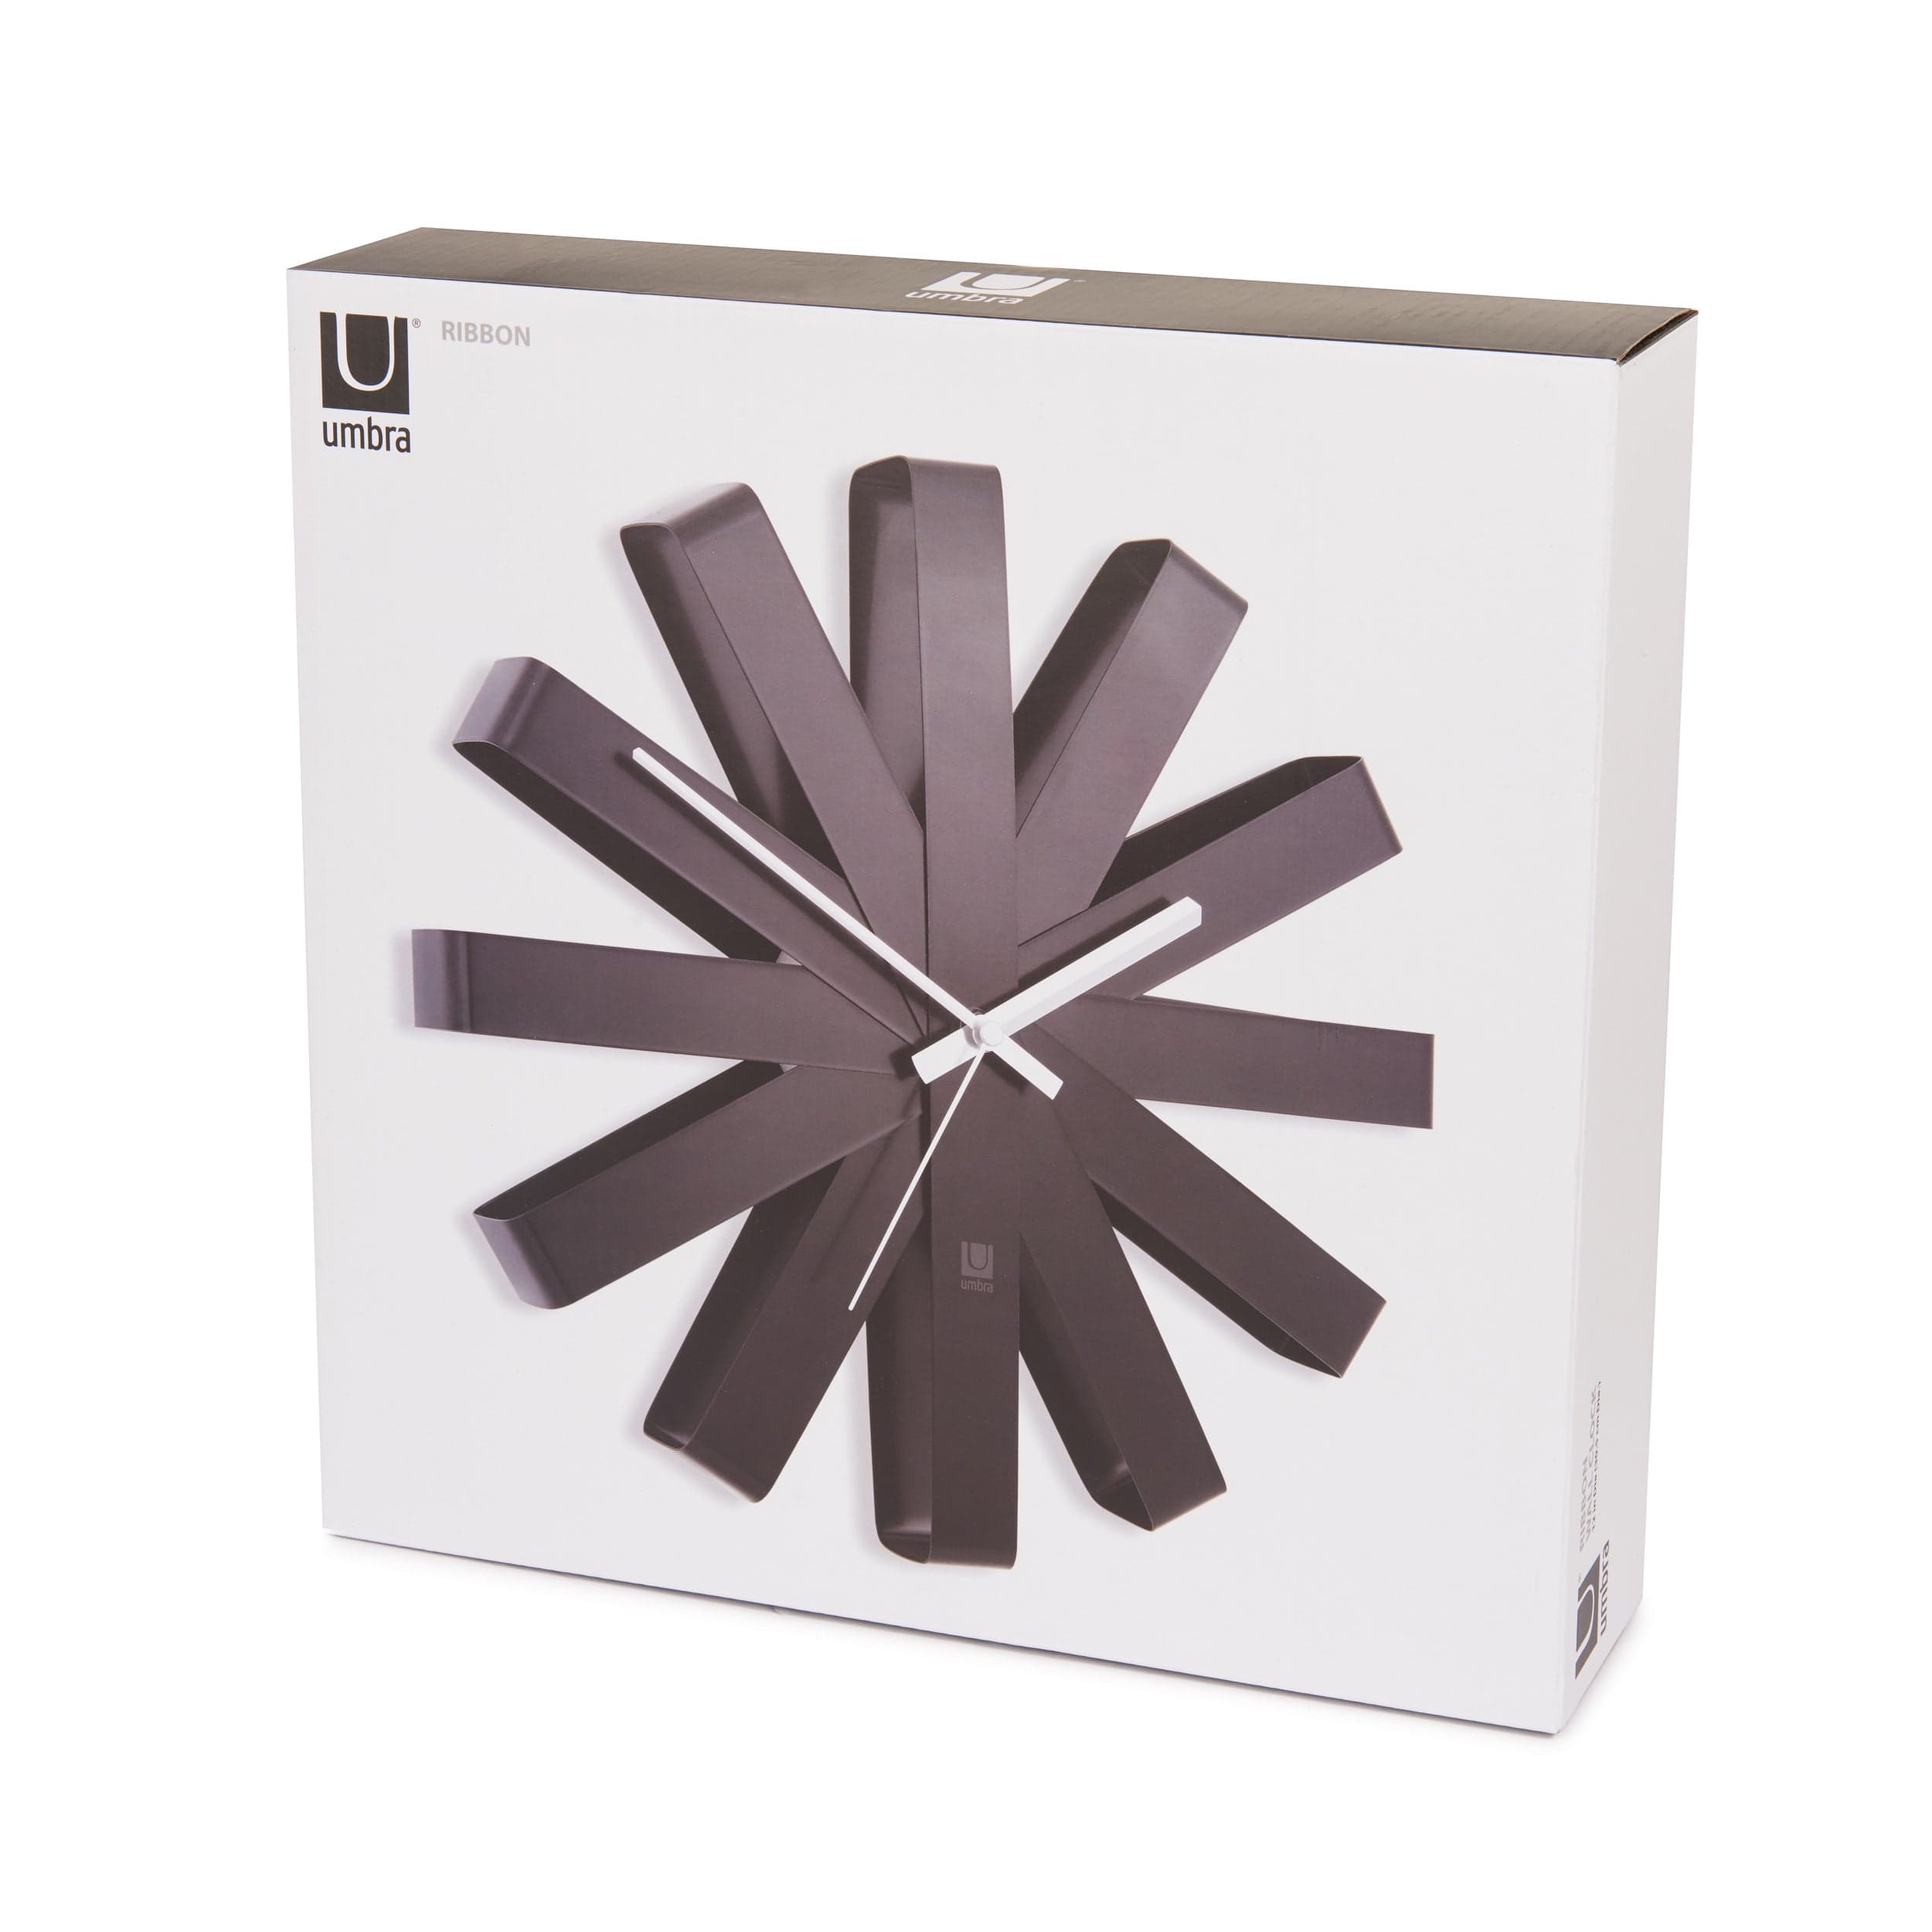 Umbra Ribbon Wall Clock 30cm Black UMB118070040 for Sale ✔️ Lowest Price  Guaranteed